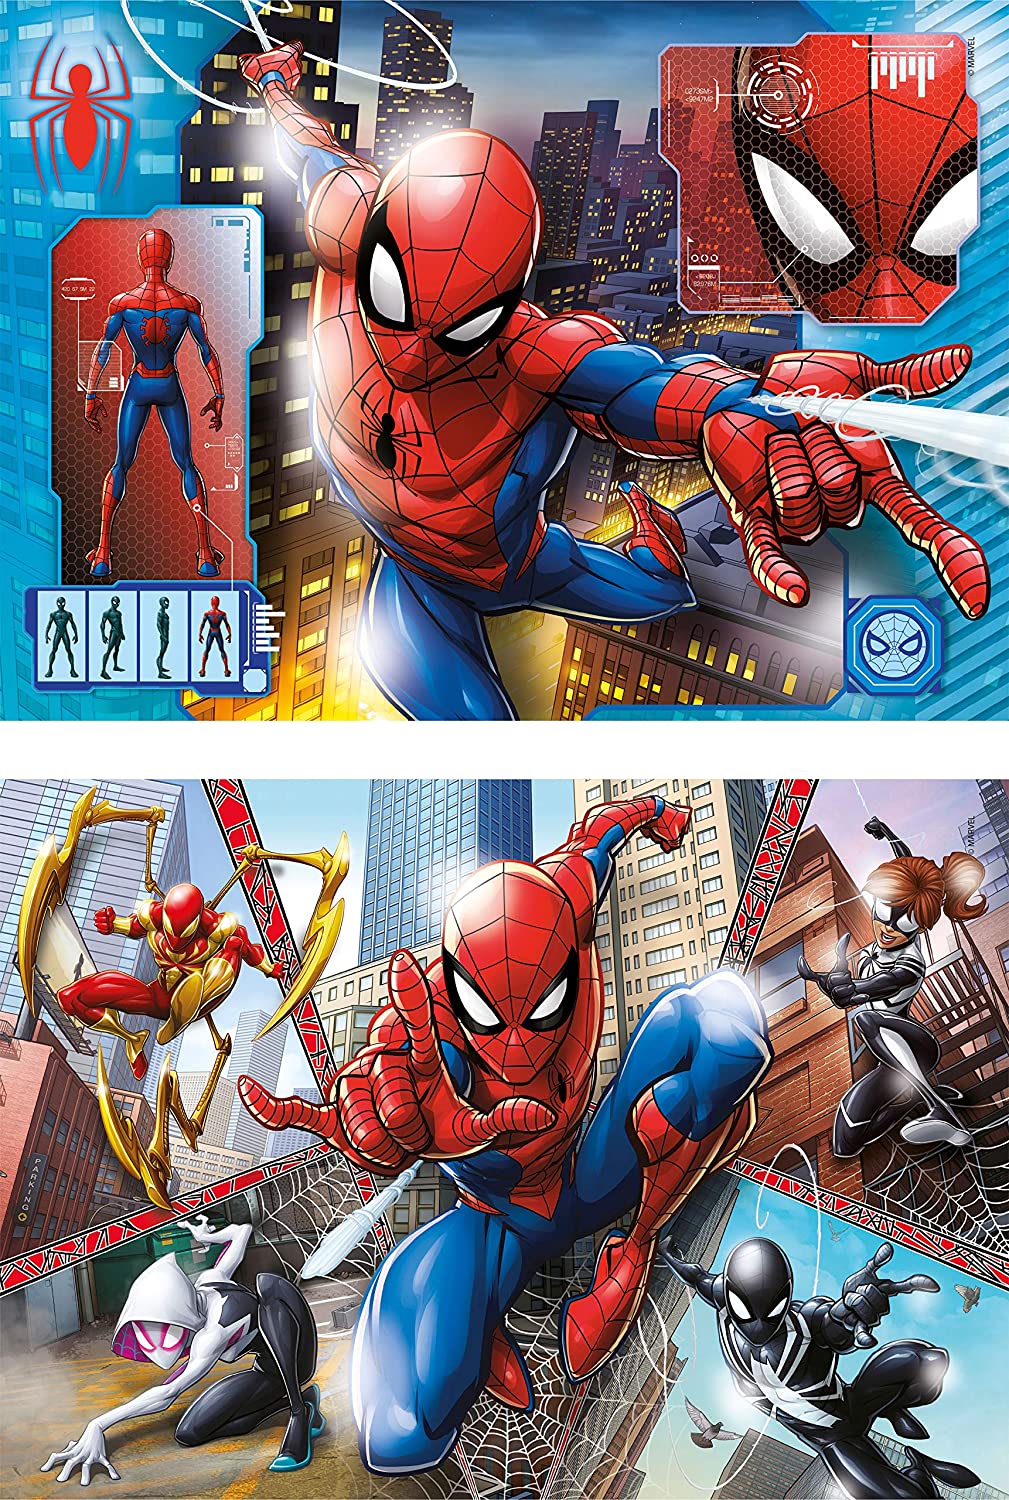 Marvel Spider-Man - 1x20 + 1x60 + 1x100 + 1x180 pieces Clementoni UK